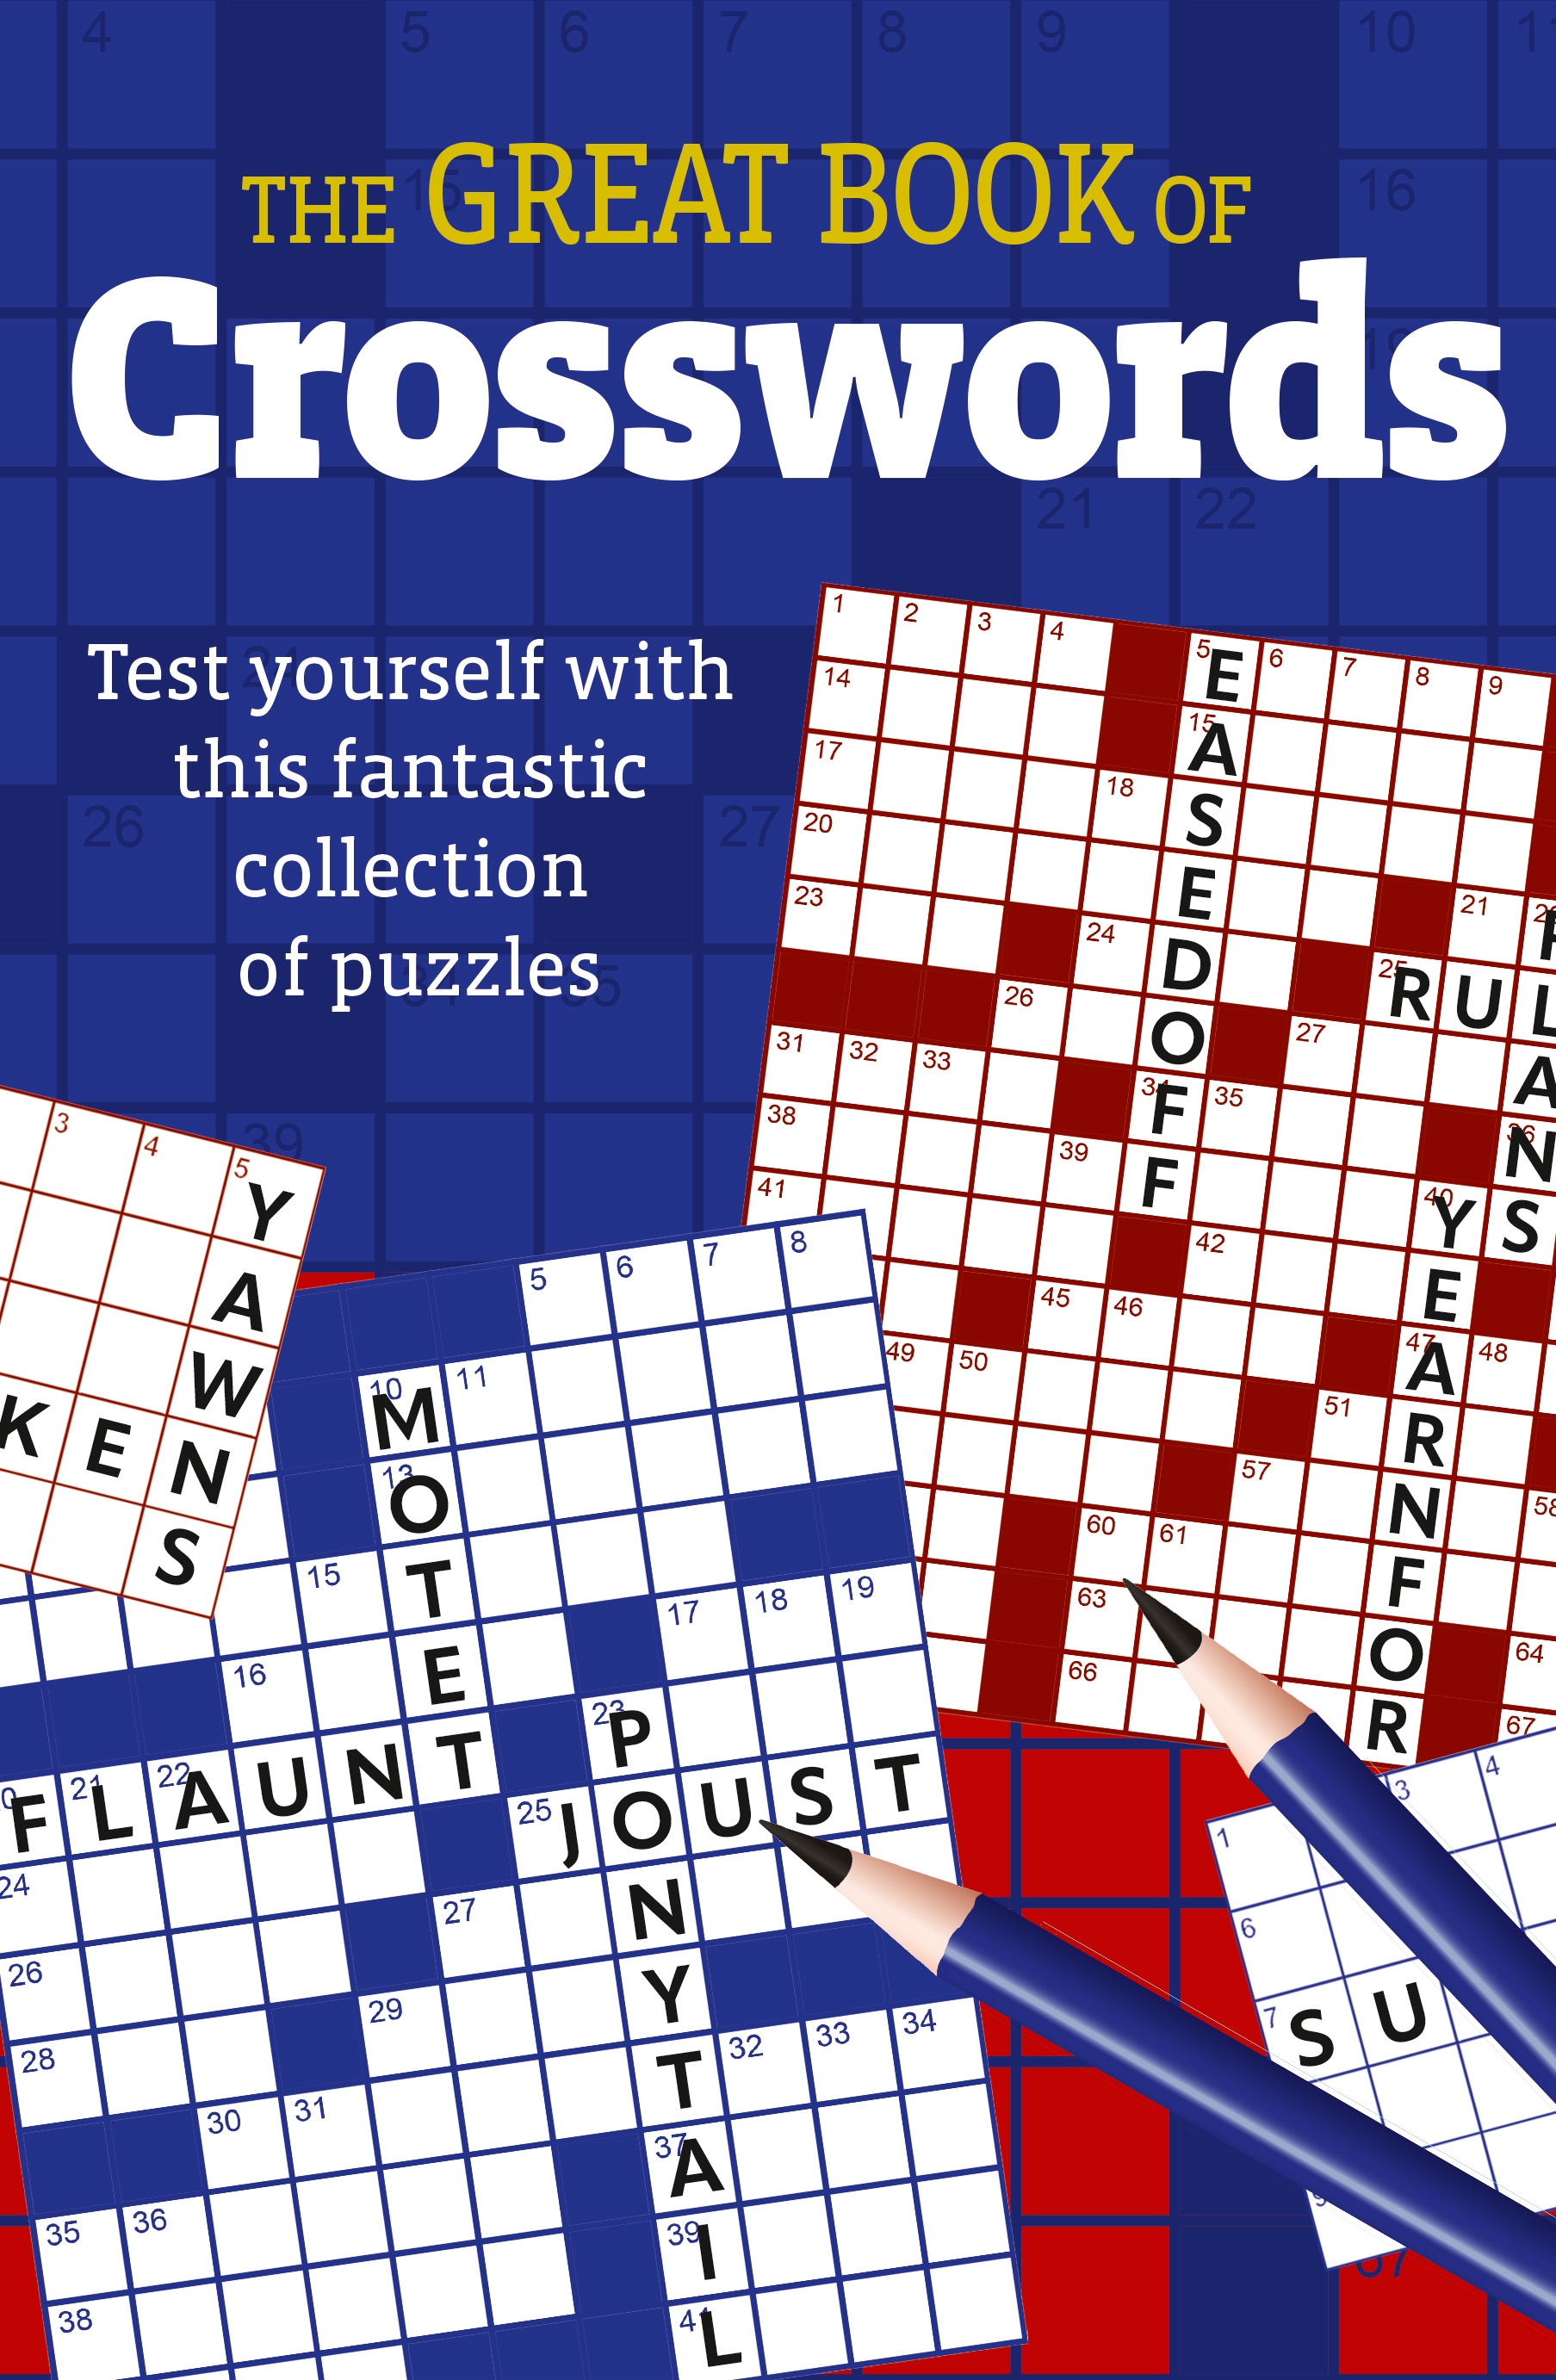 Great Book of Crosswords, The